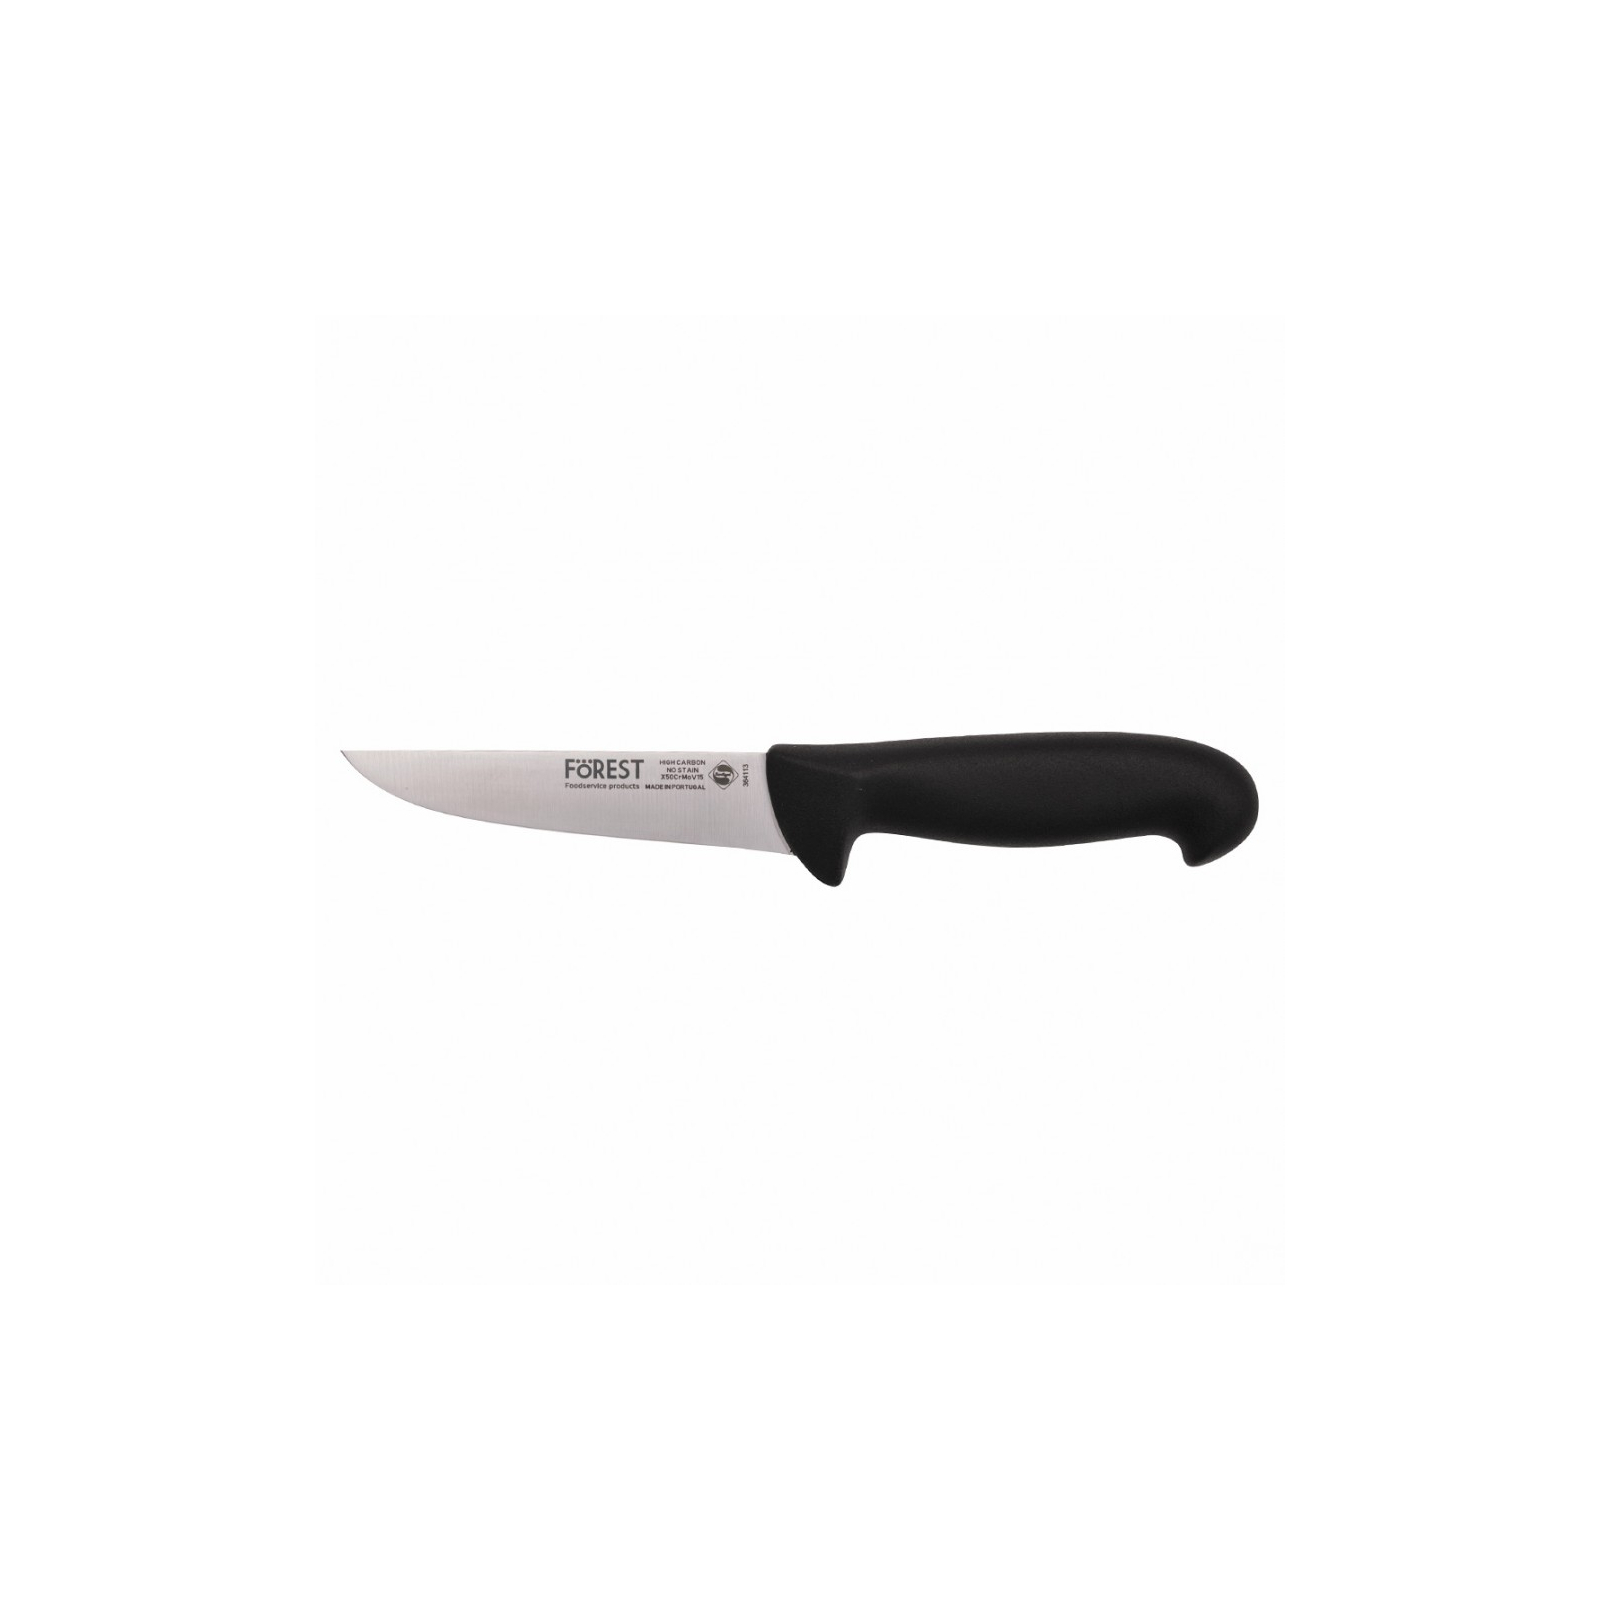 Кухонный нож FoREST обвалювальний 130 мм Чорний (364113)